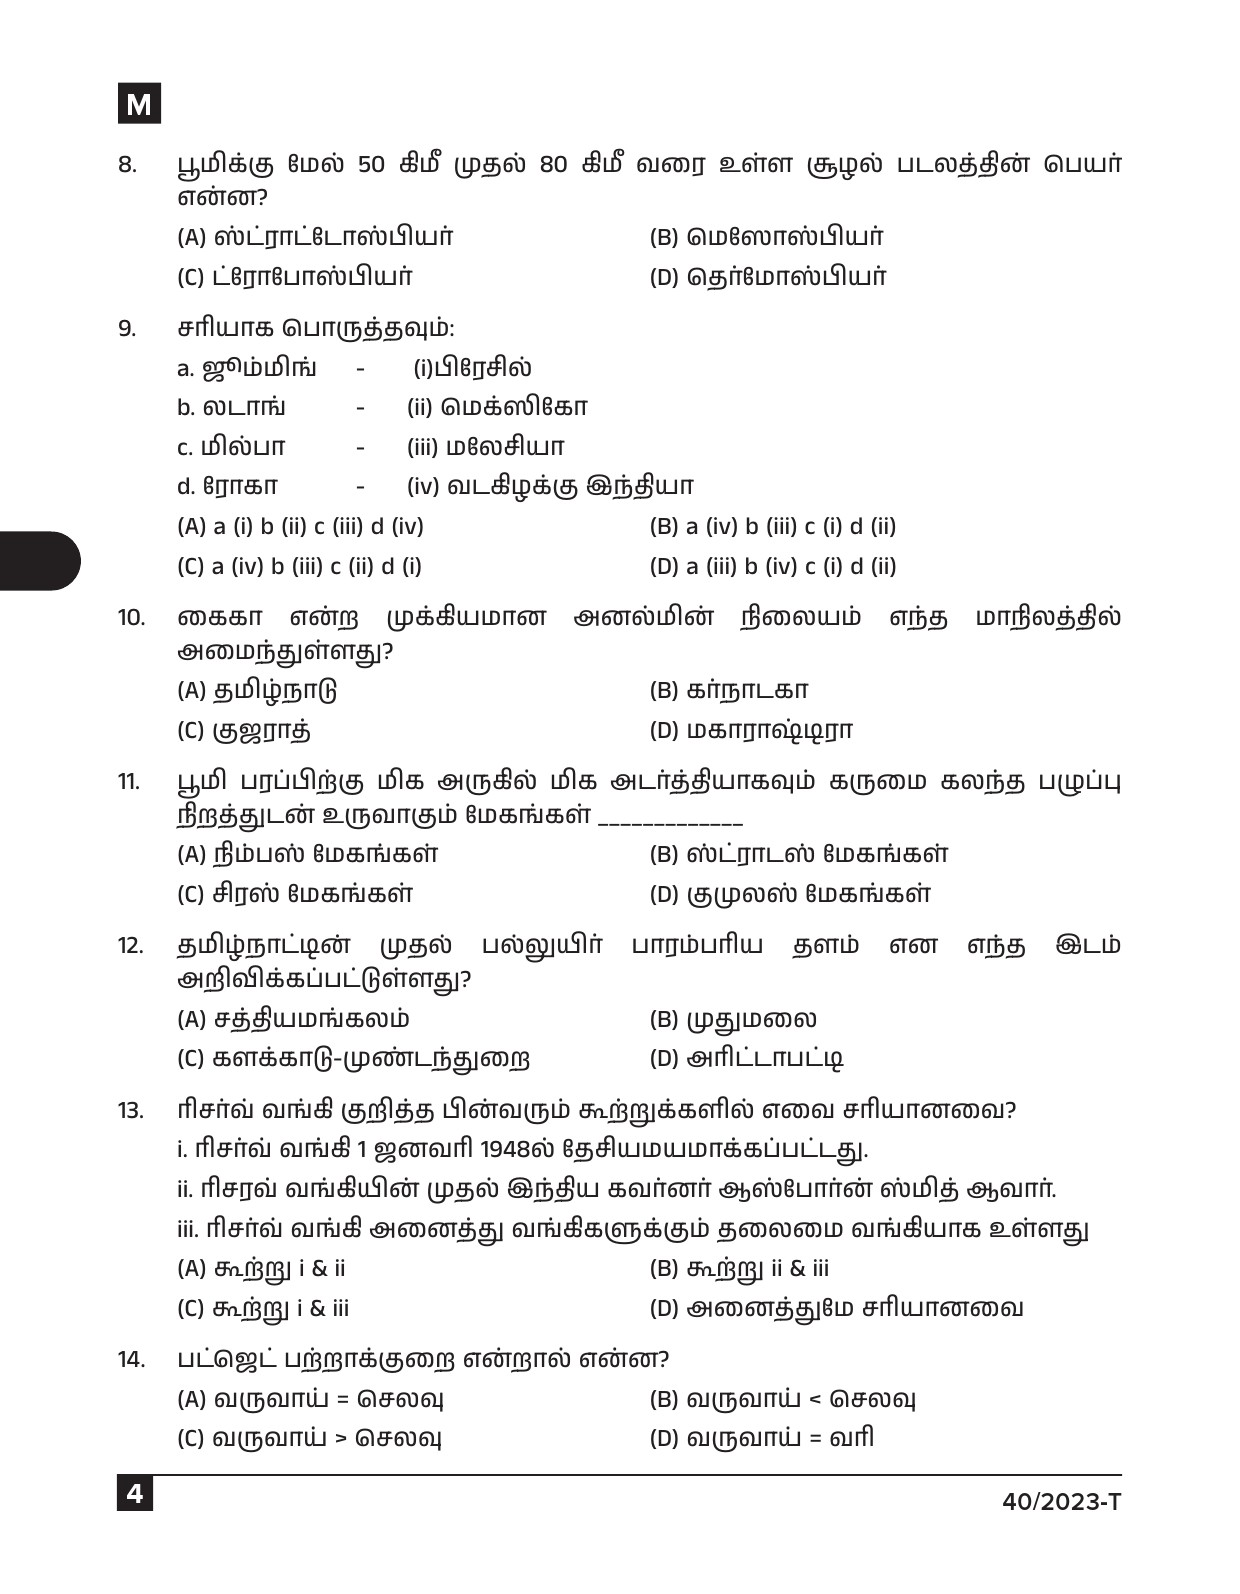 KPSC Data Entry Operator Tamil Exam 2023 Code 0402023 T 3